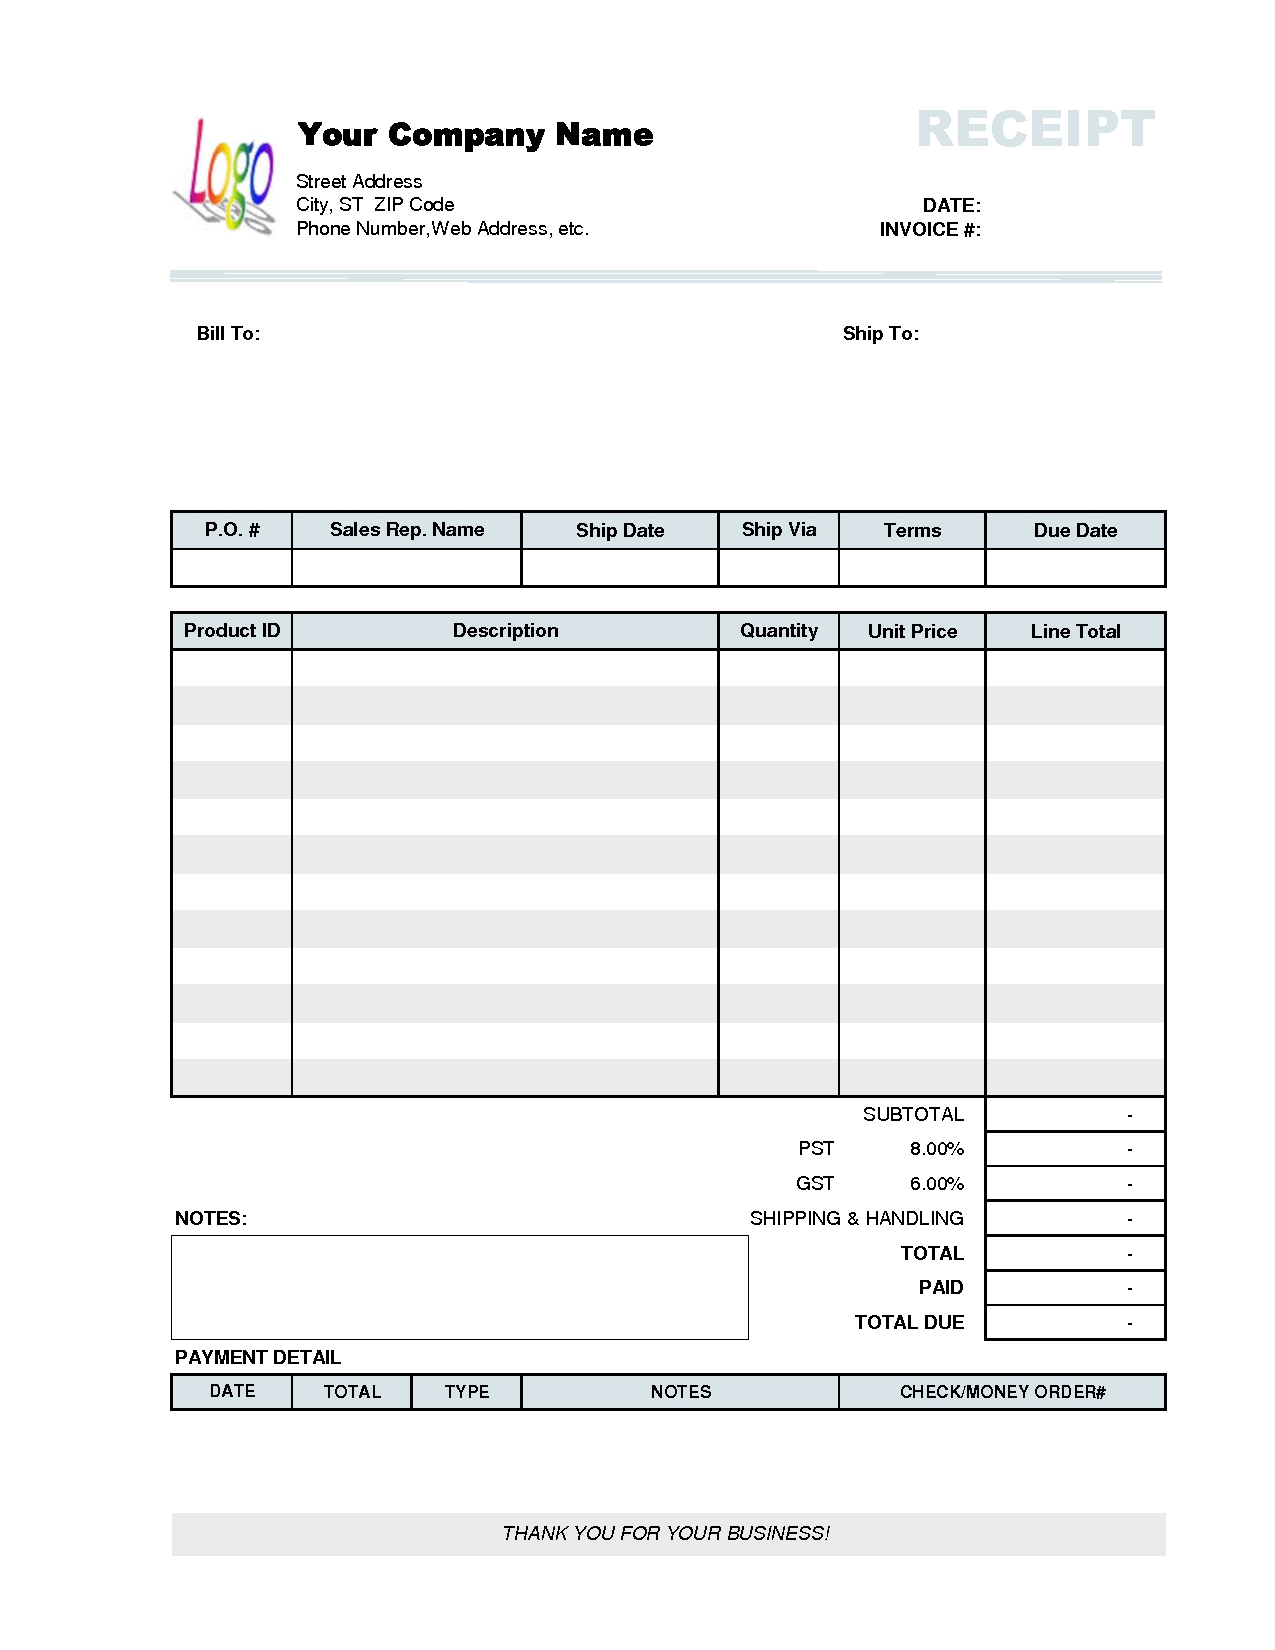 receipt invoice template invoice example invoice receipt sample